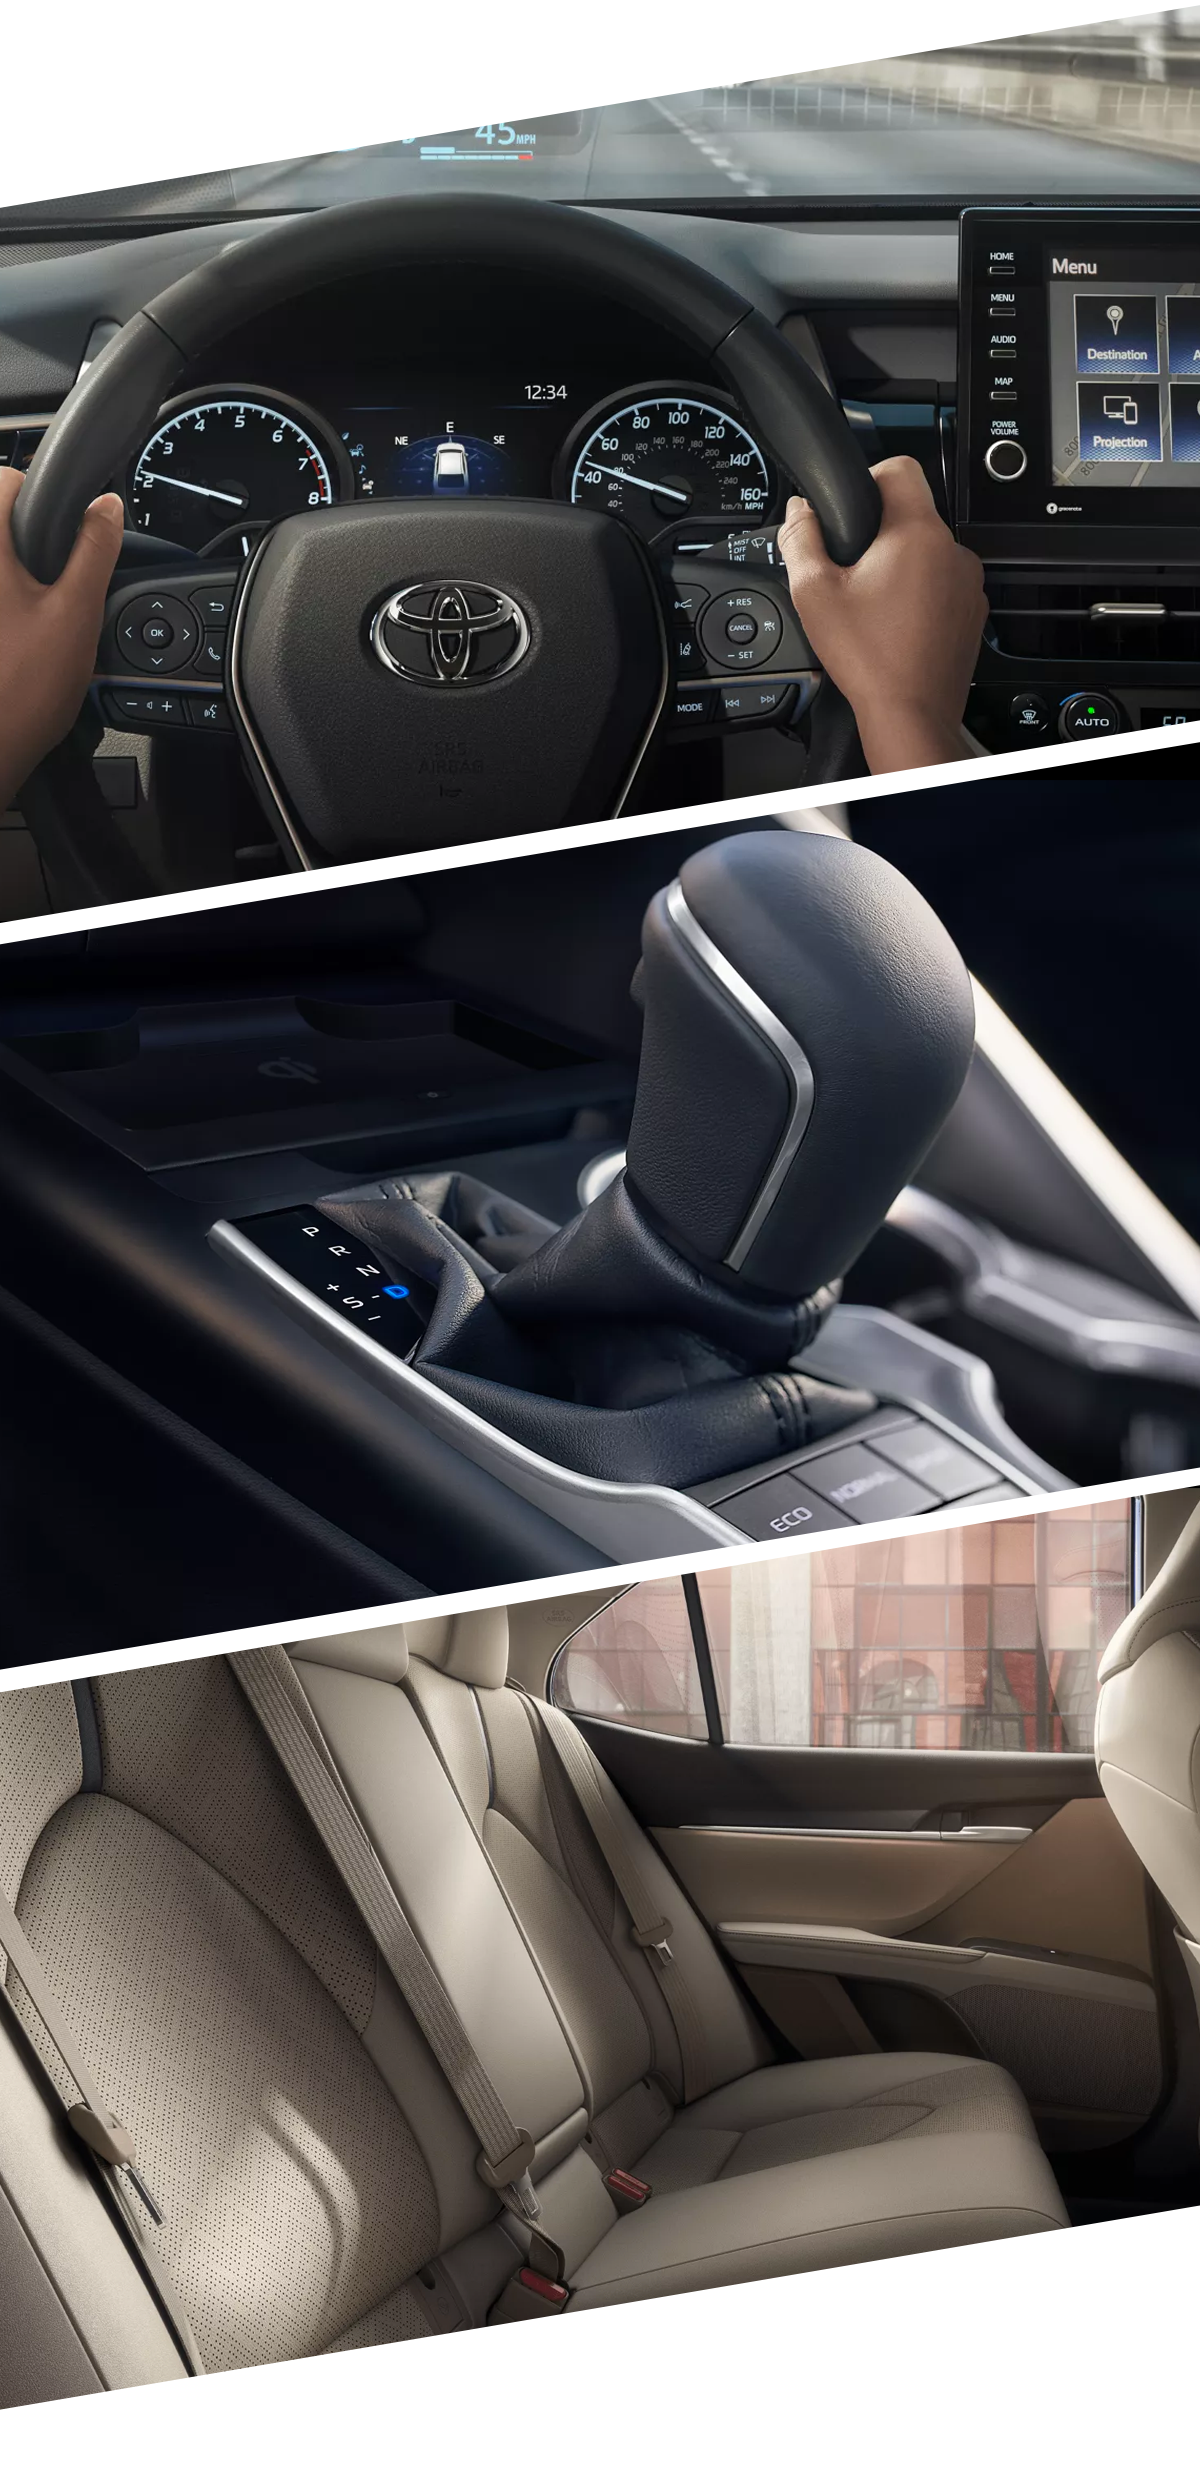 2022 Toyota Camry Interior